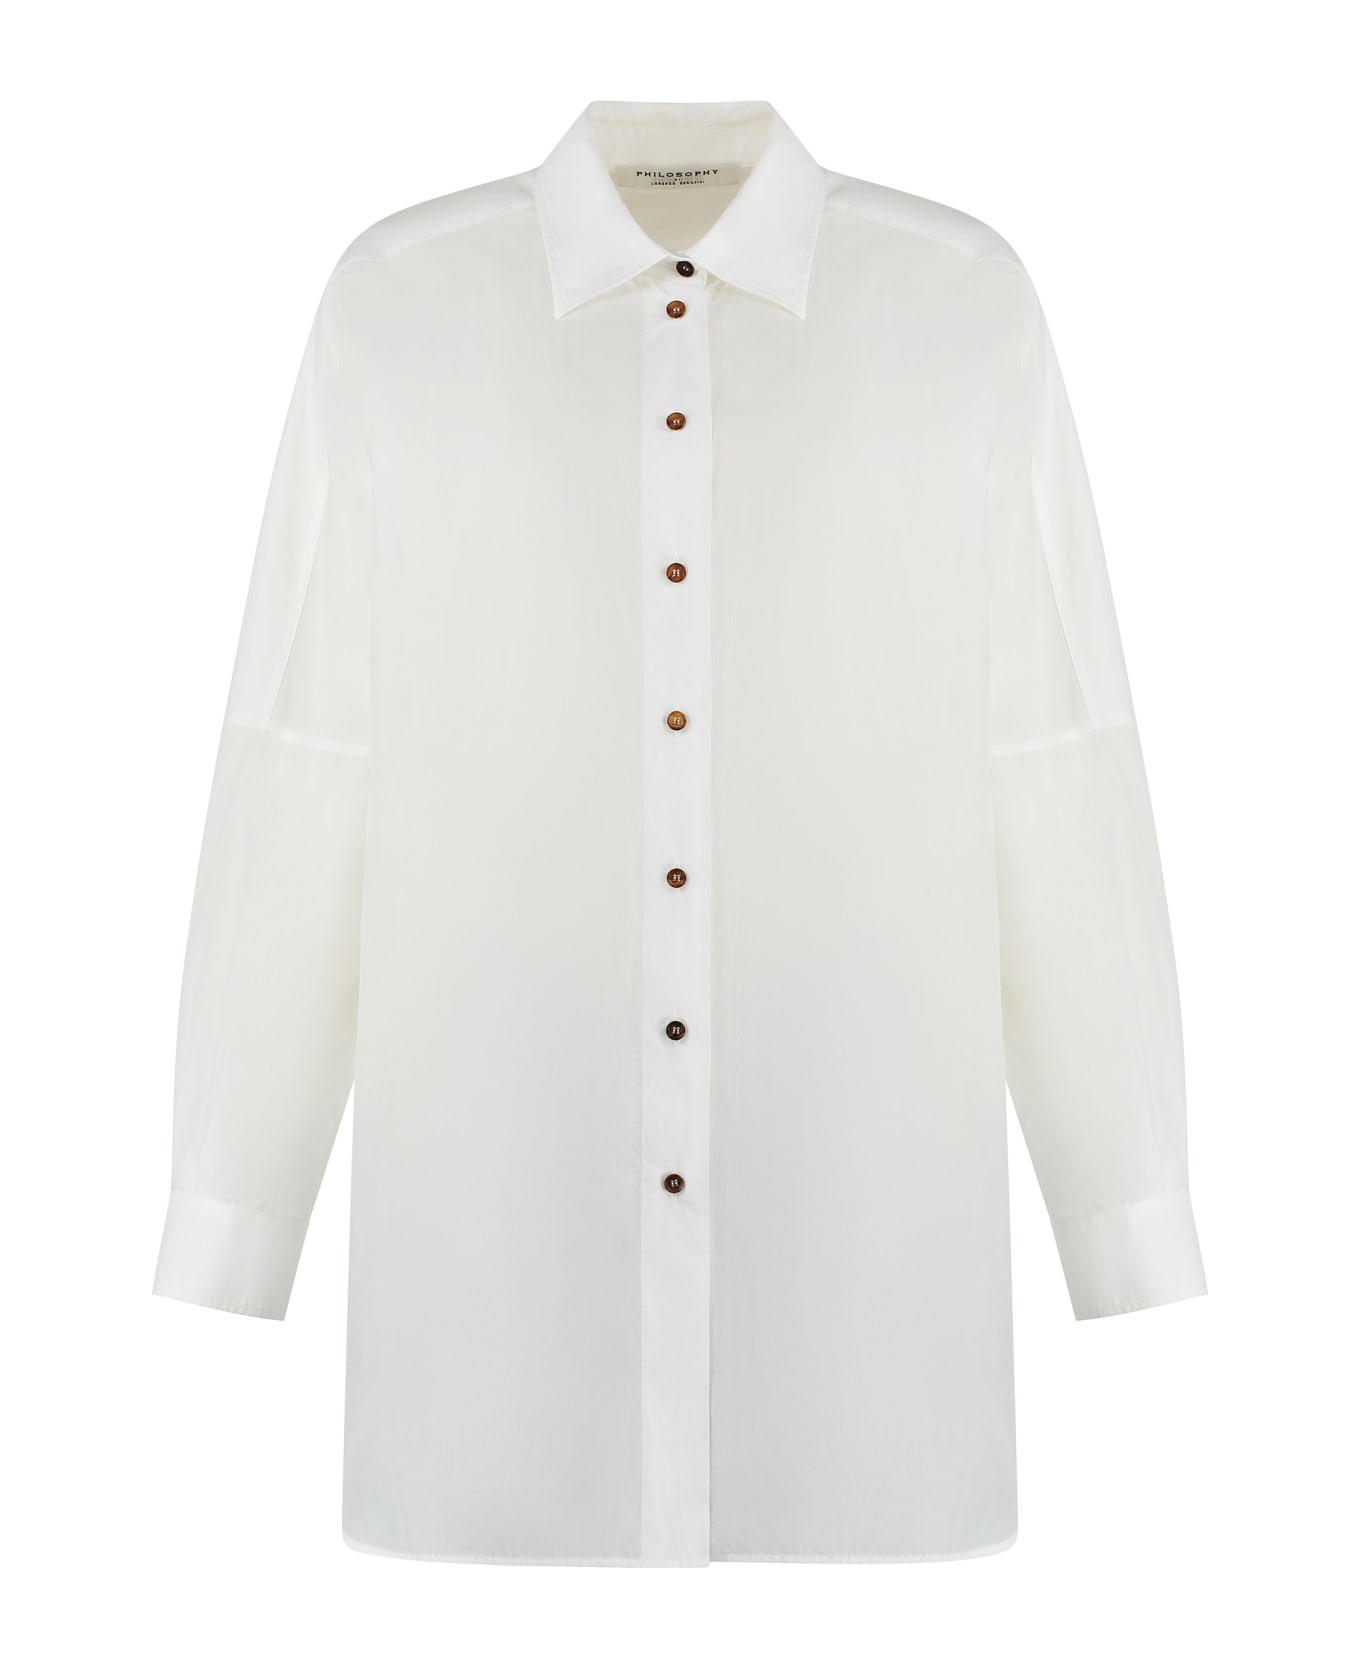 Philosophy di Lorenzo Serafini Cotton Blend Shirt - White シャツ